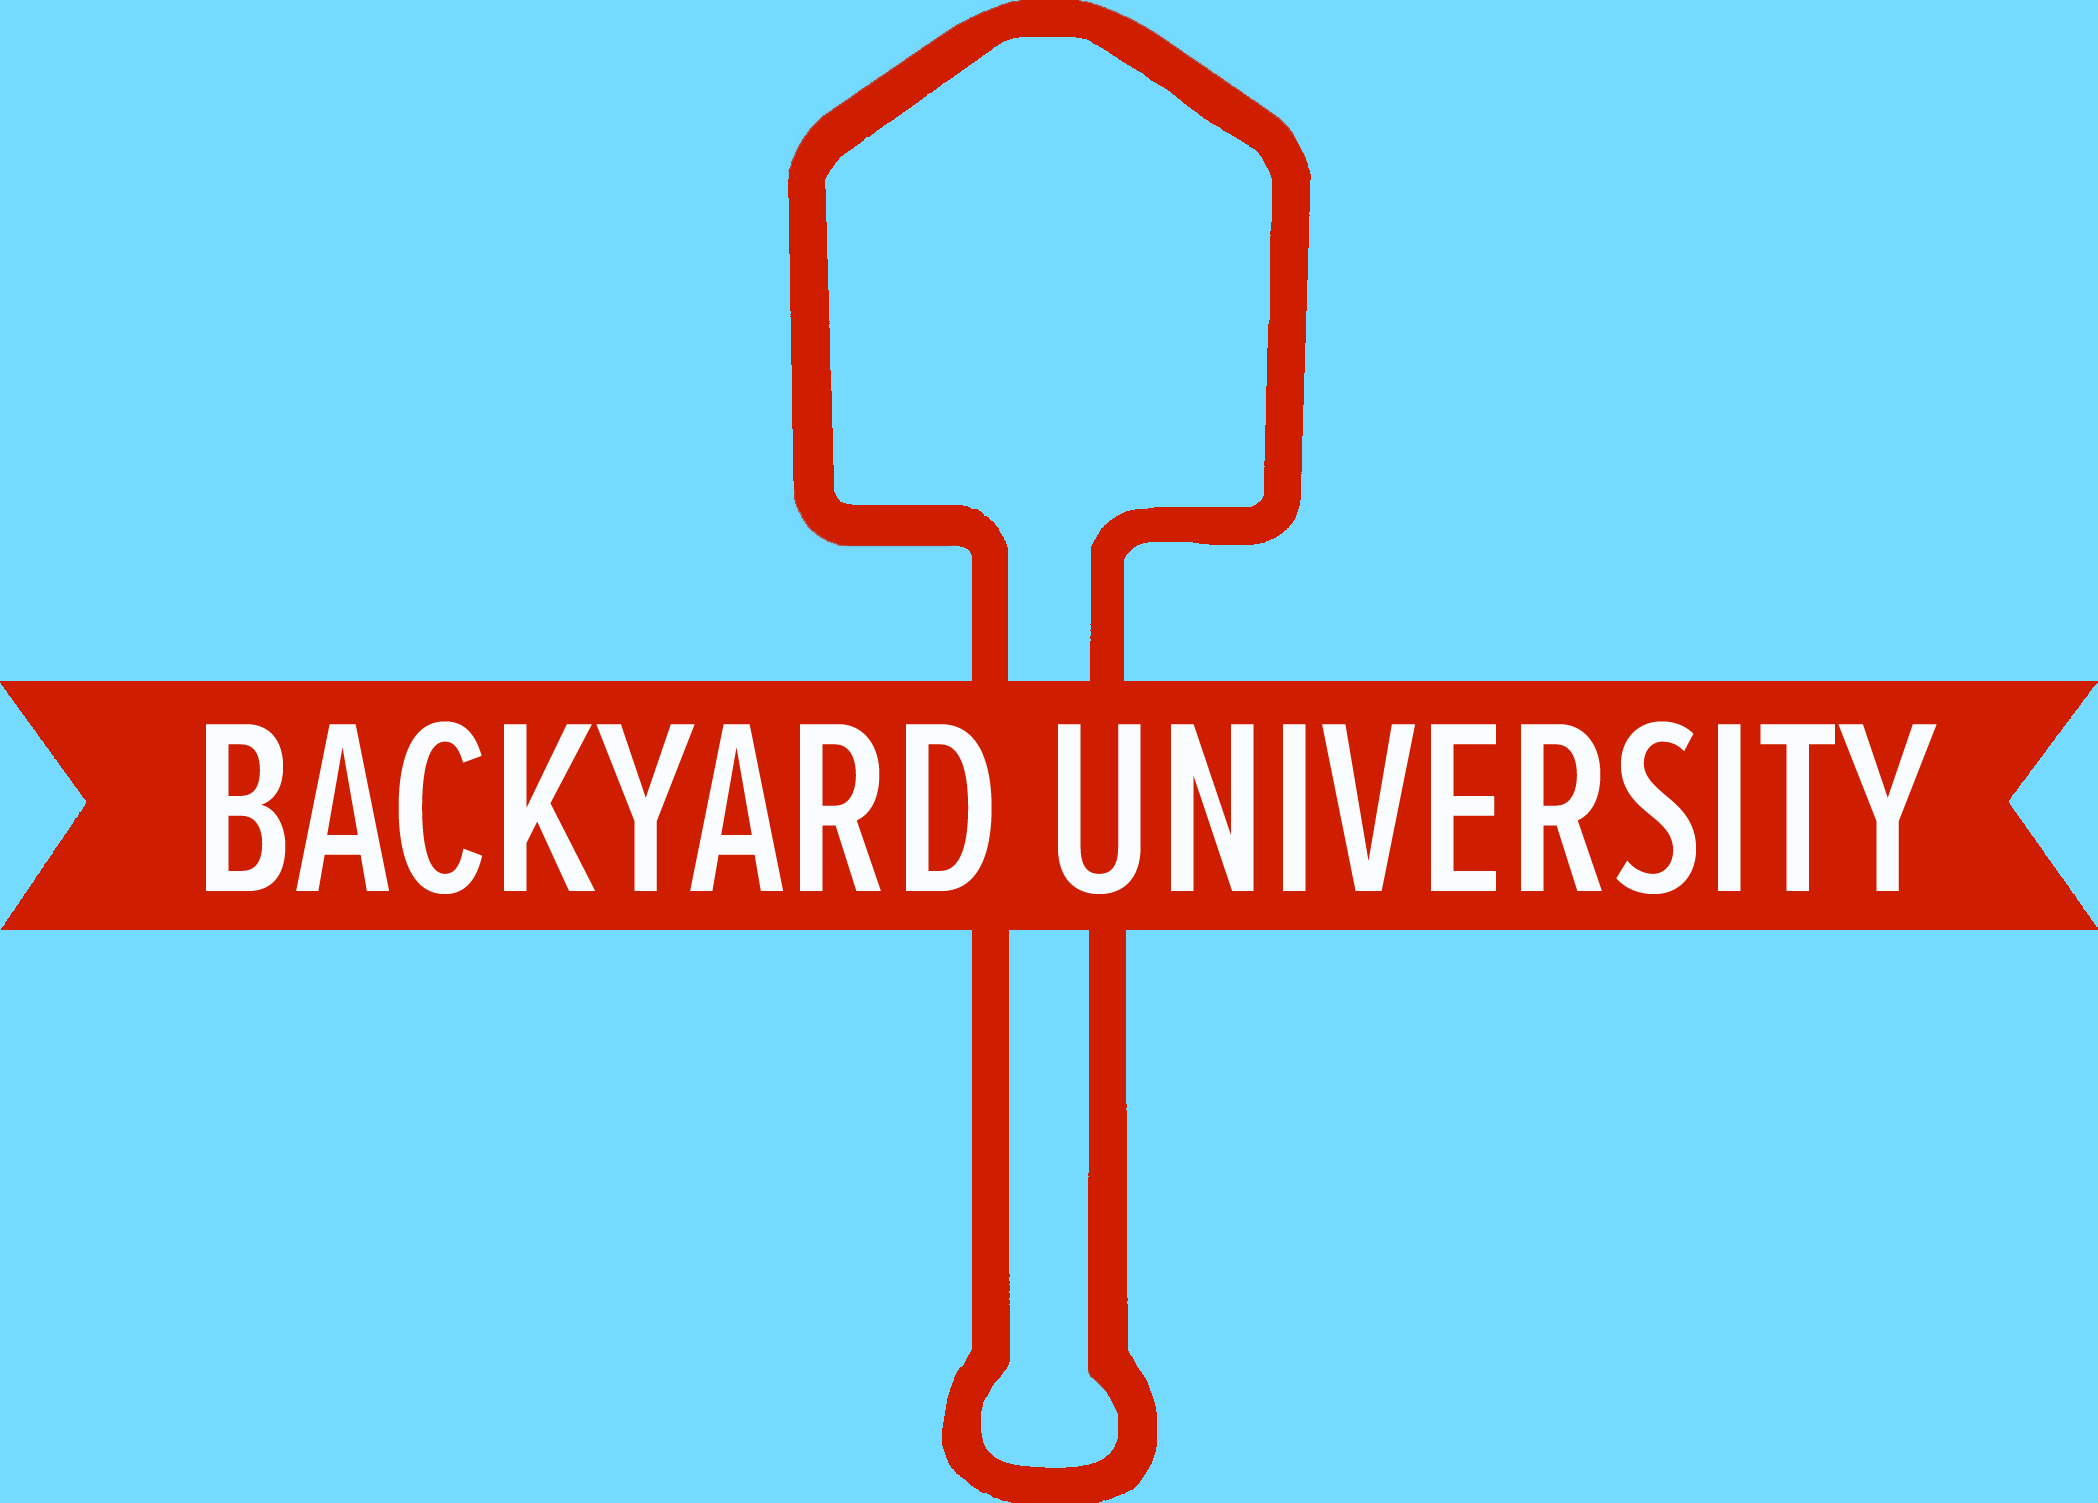 Backyard University logo